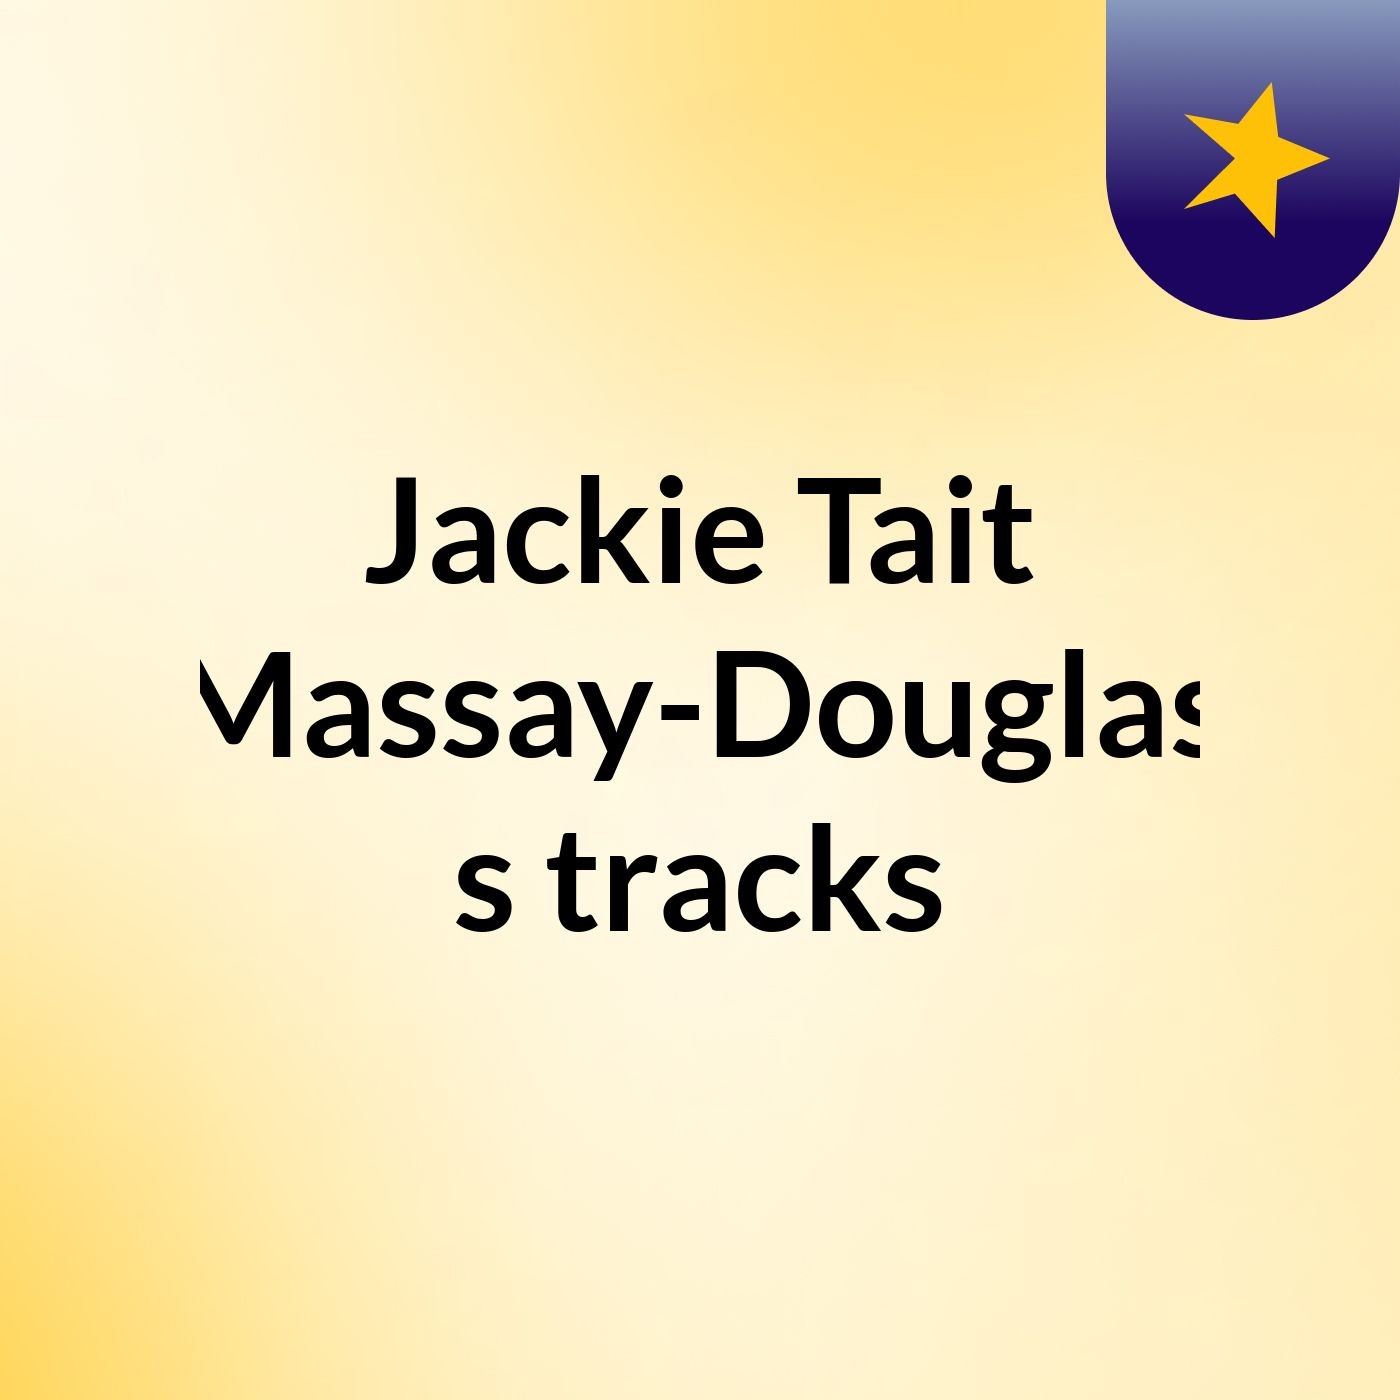 Jackie Tait Massay-Douglas's tracks